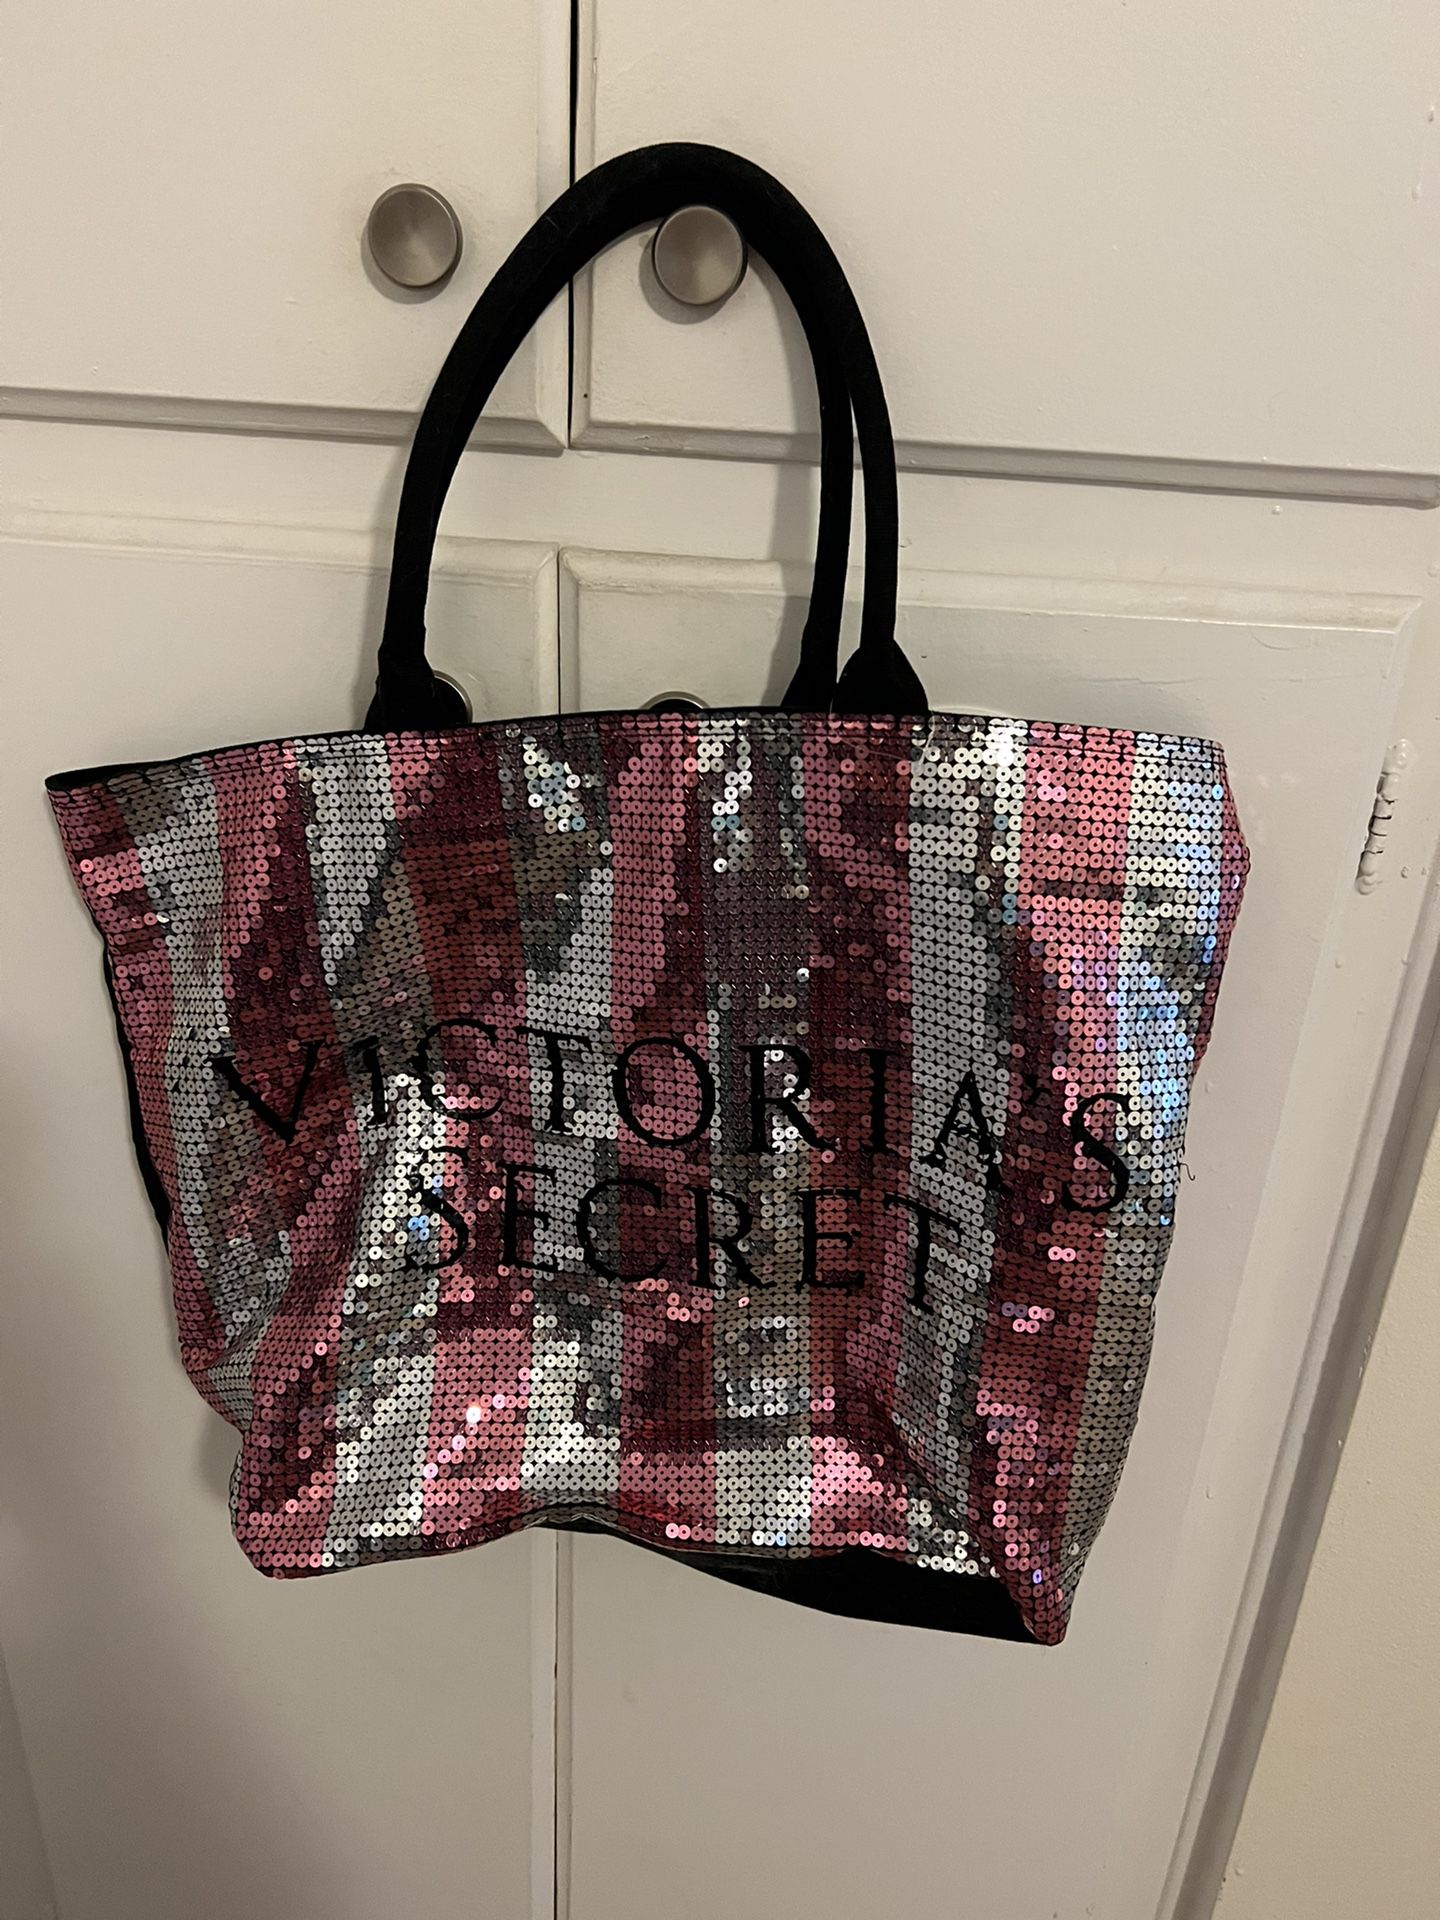 Victoria's Secret Sequin Tote Bag for Sale in San Diego, CA - OfferUp